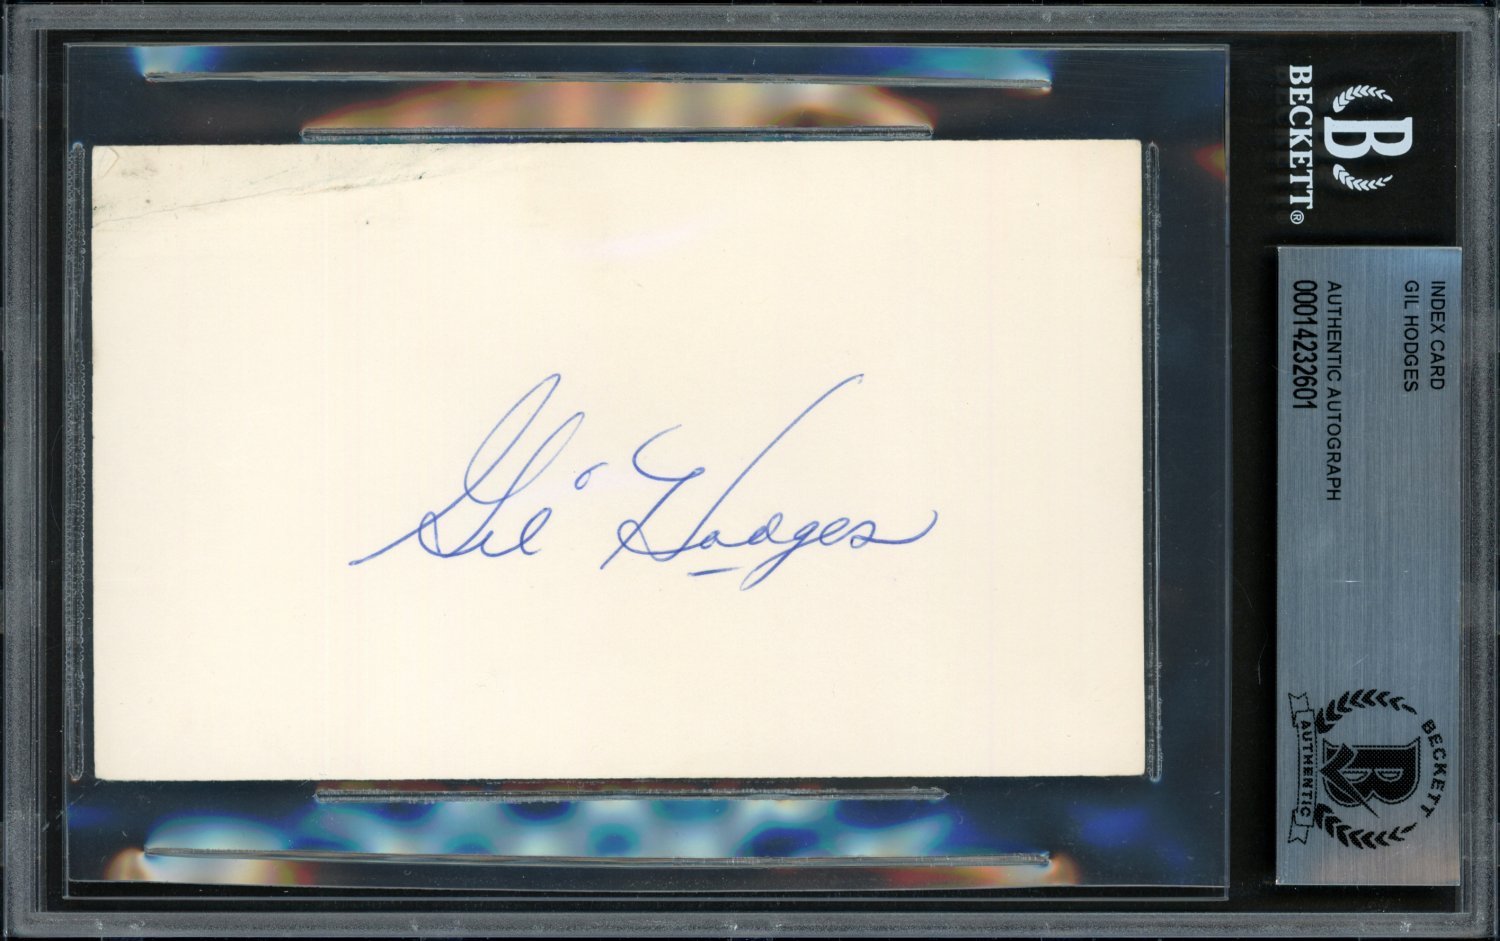 Gil Hodges Autographed Cut Signature Card